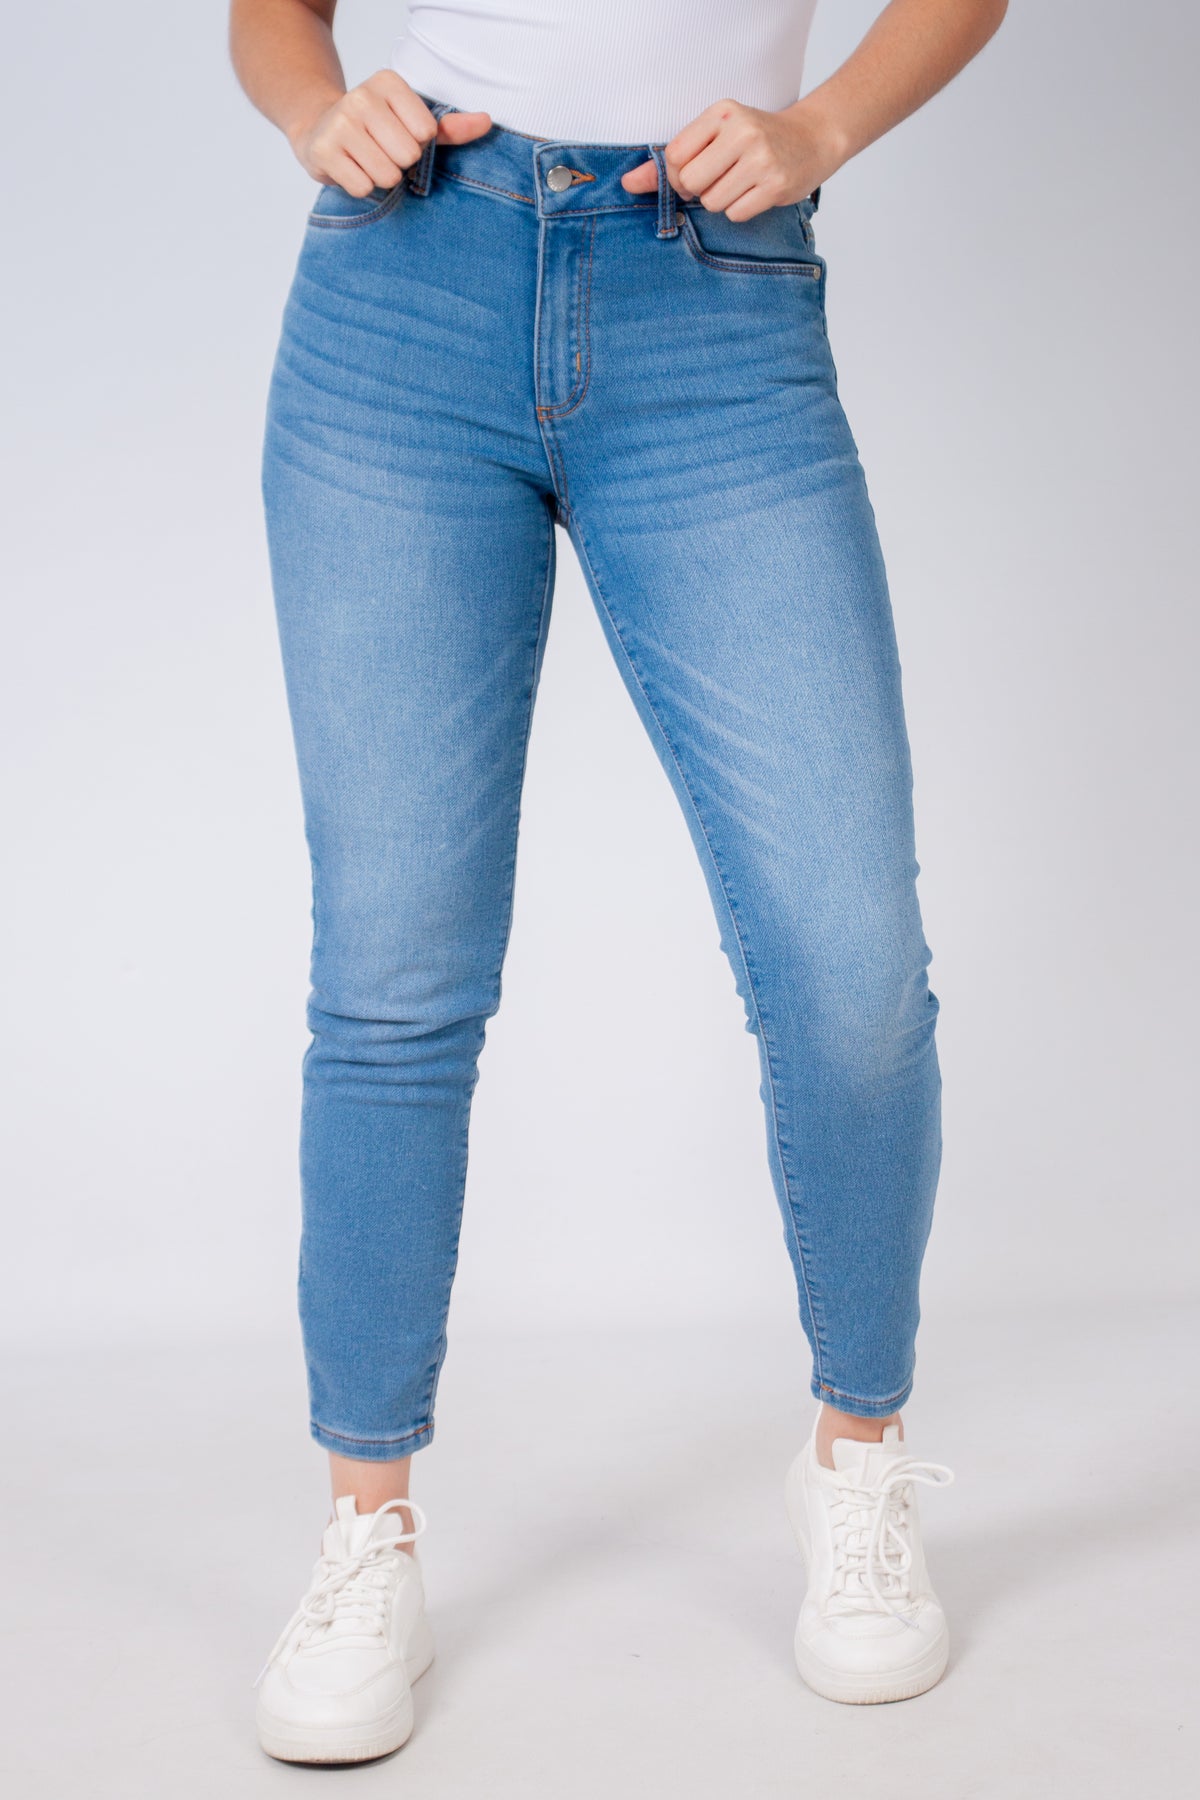 Take 2 Denim Jeans for R300 – Clothing Junction